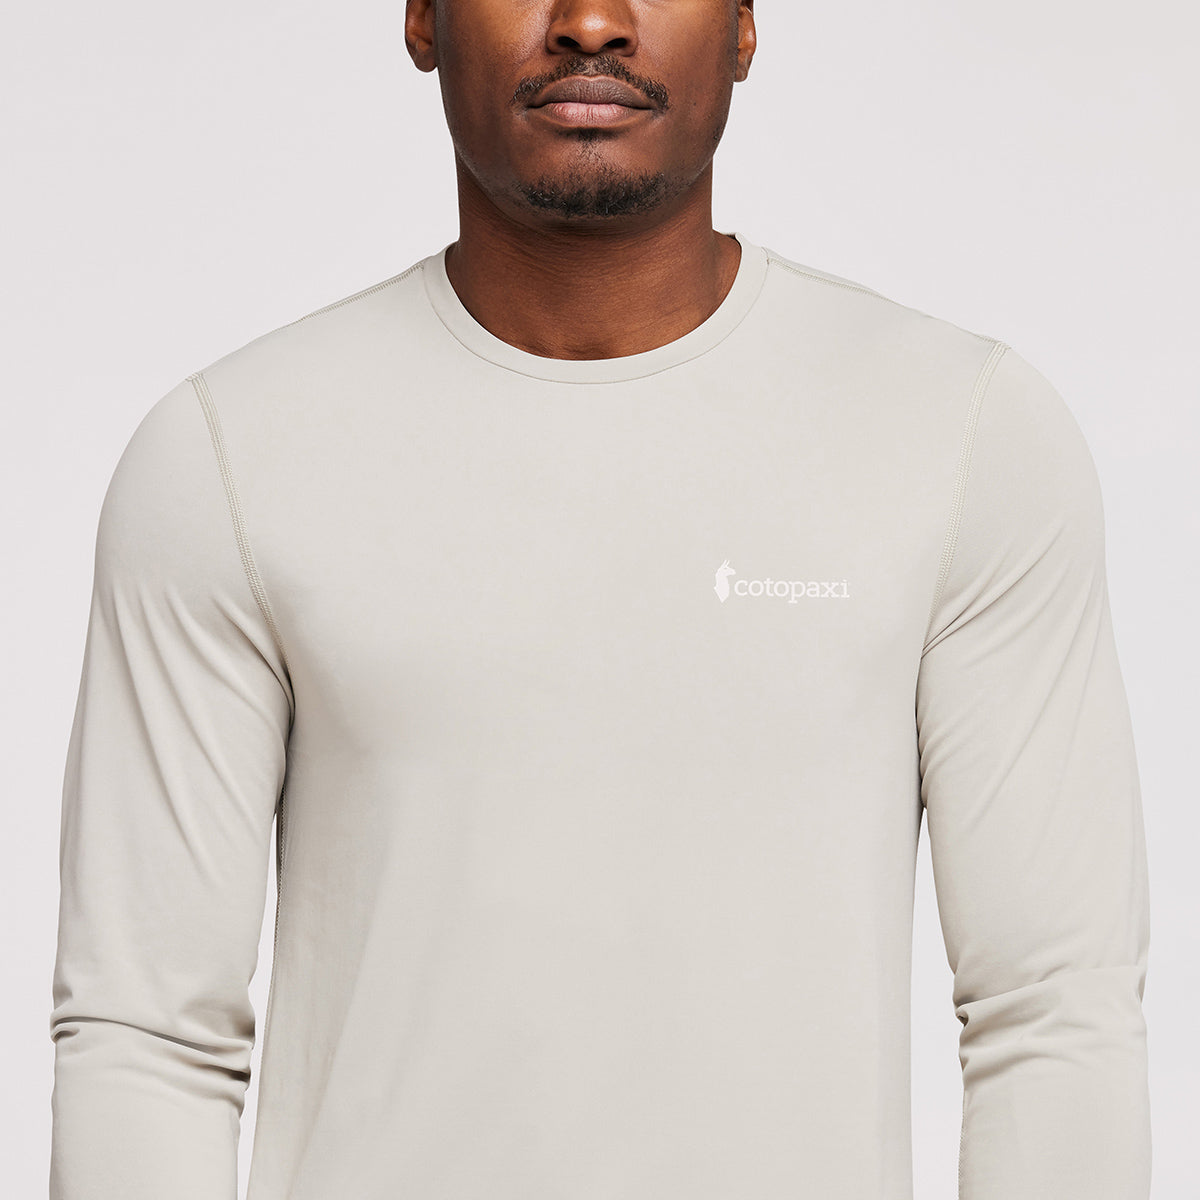 Cotopaxi Fino Long-Sleeve Tech Tee - MENS コトパクシ フィノ ロングスリーブ テック Tシャツ メンズ